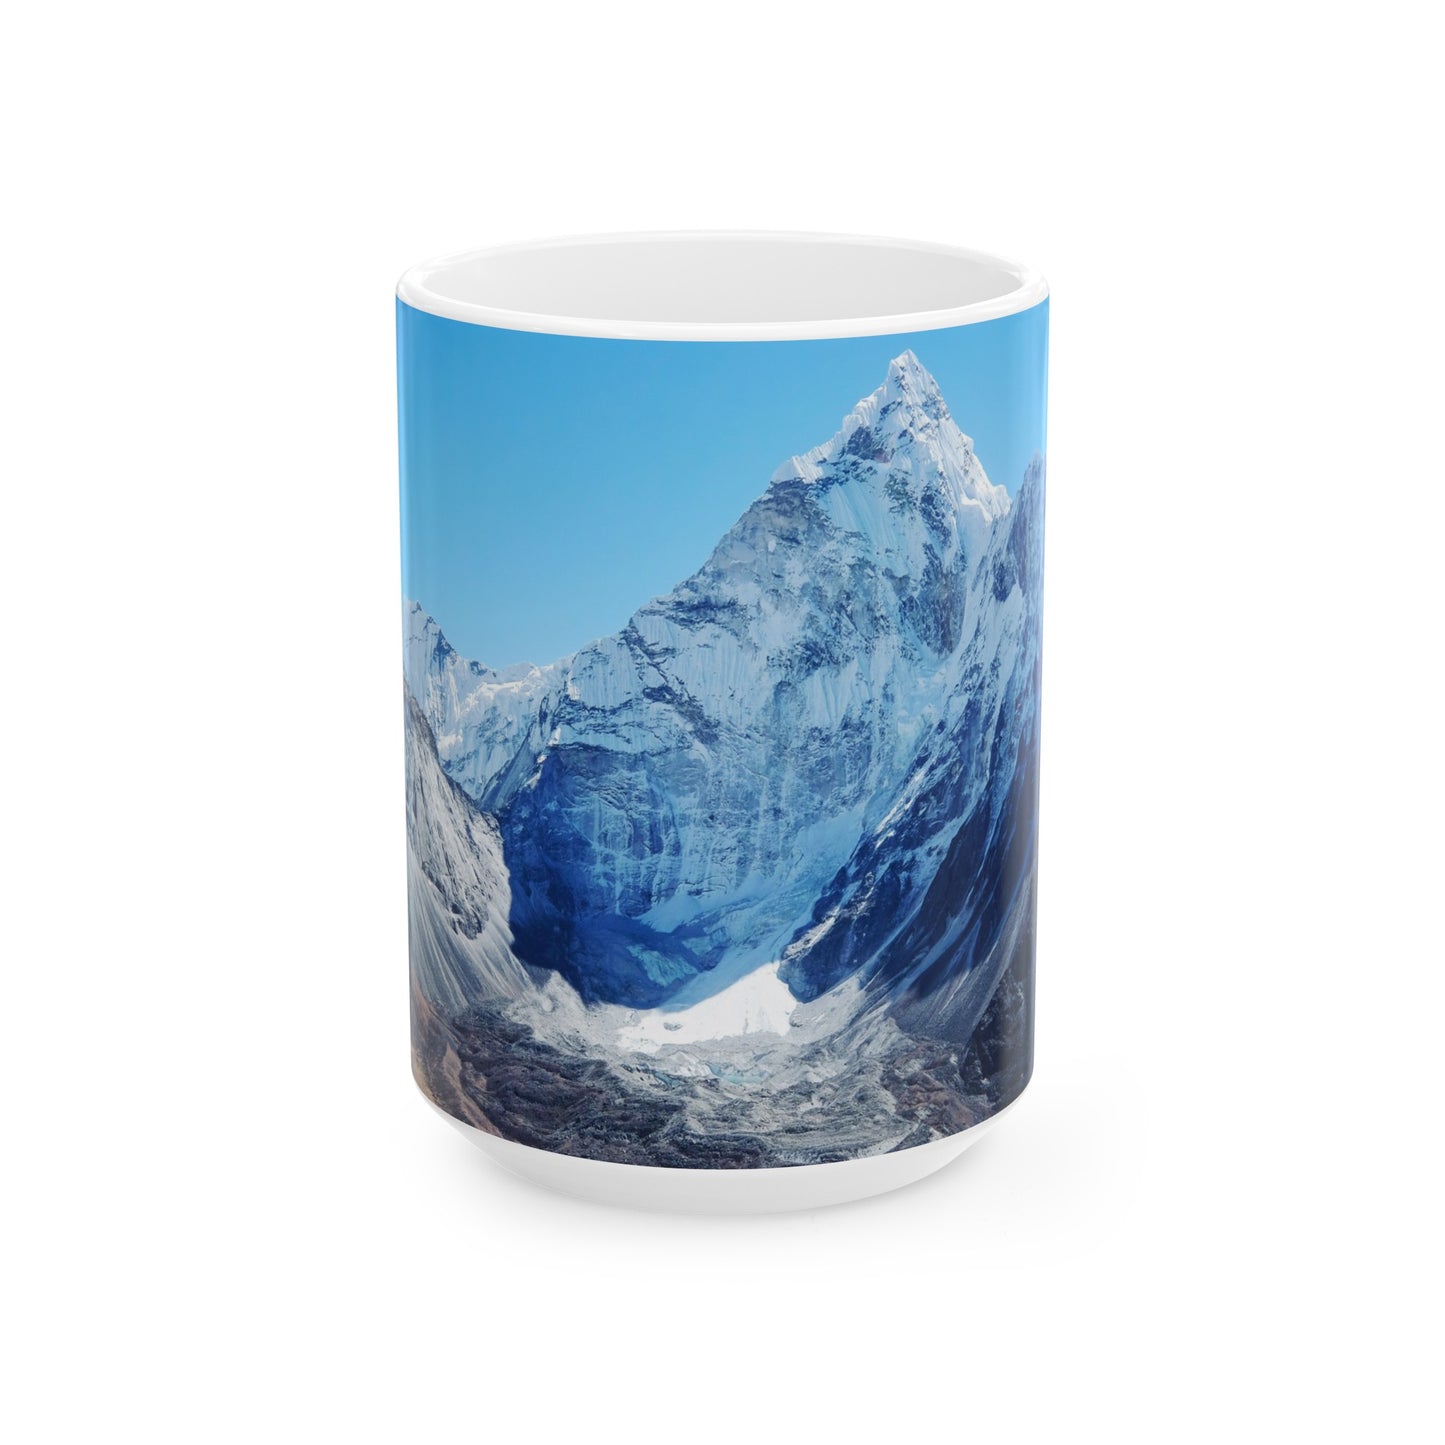 Mug...Snow Peak Mountain